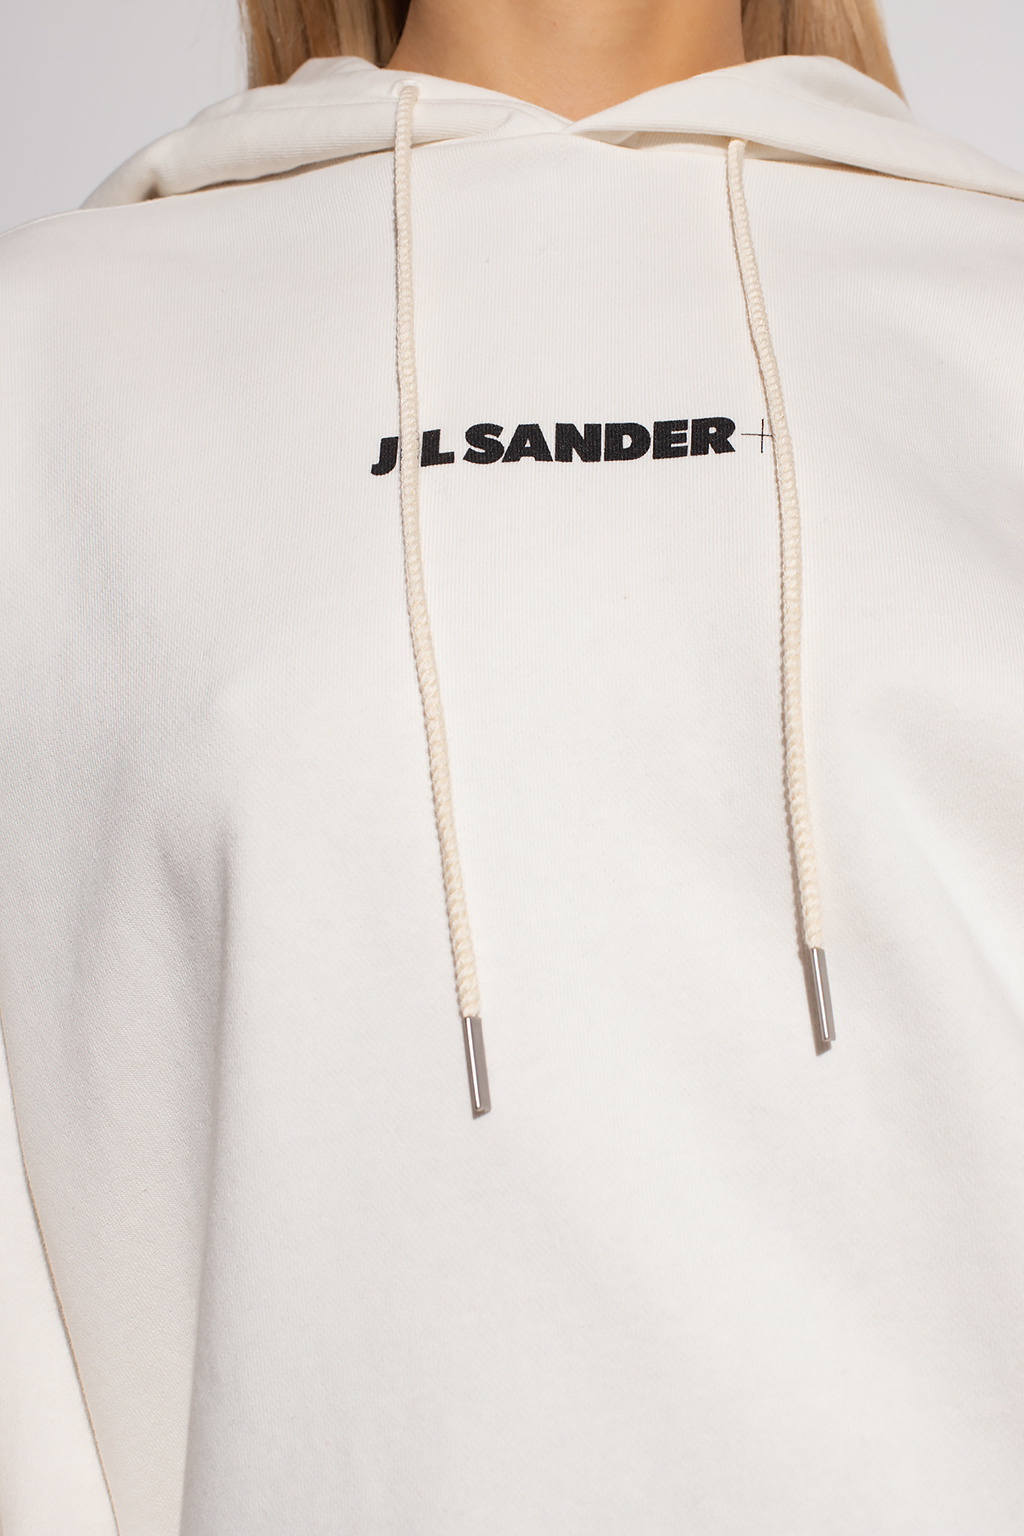 JIL SANDER+ Jil Sander line